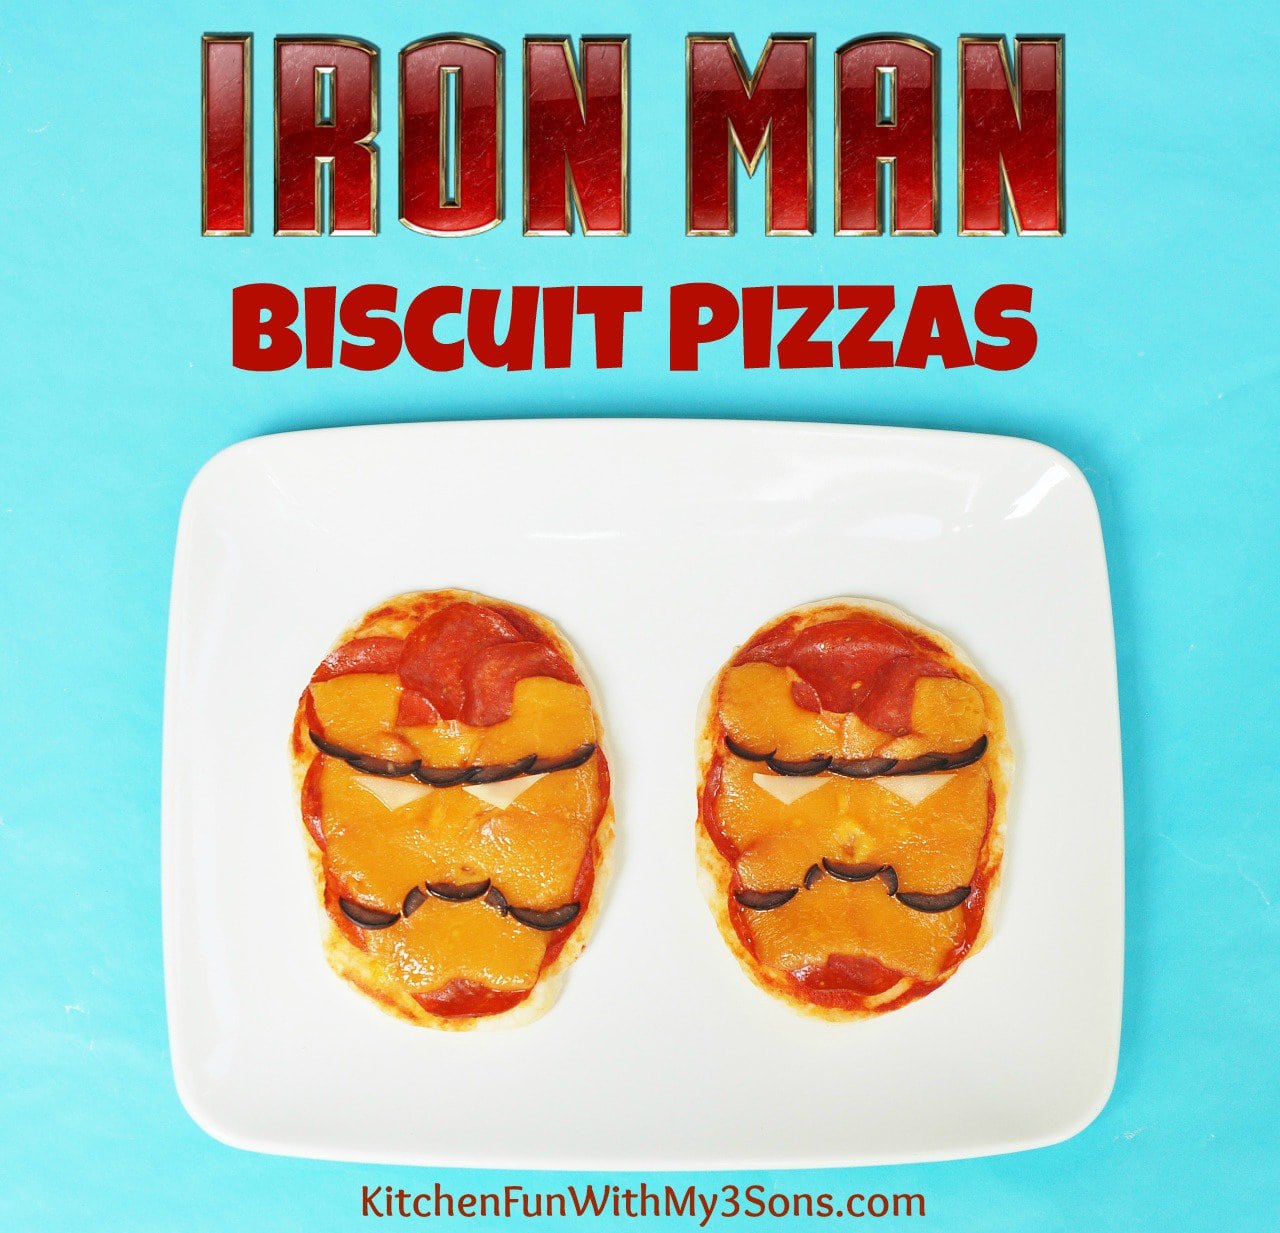 Iron man biscuit pizzas